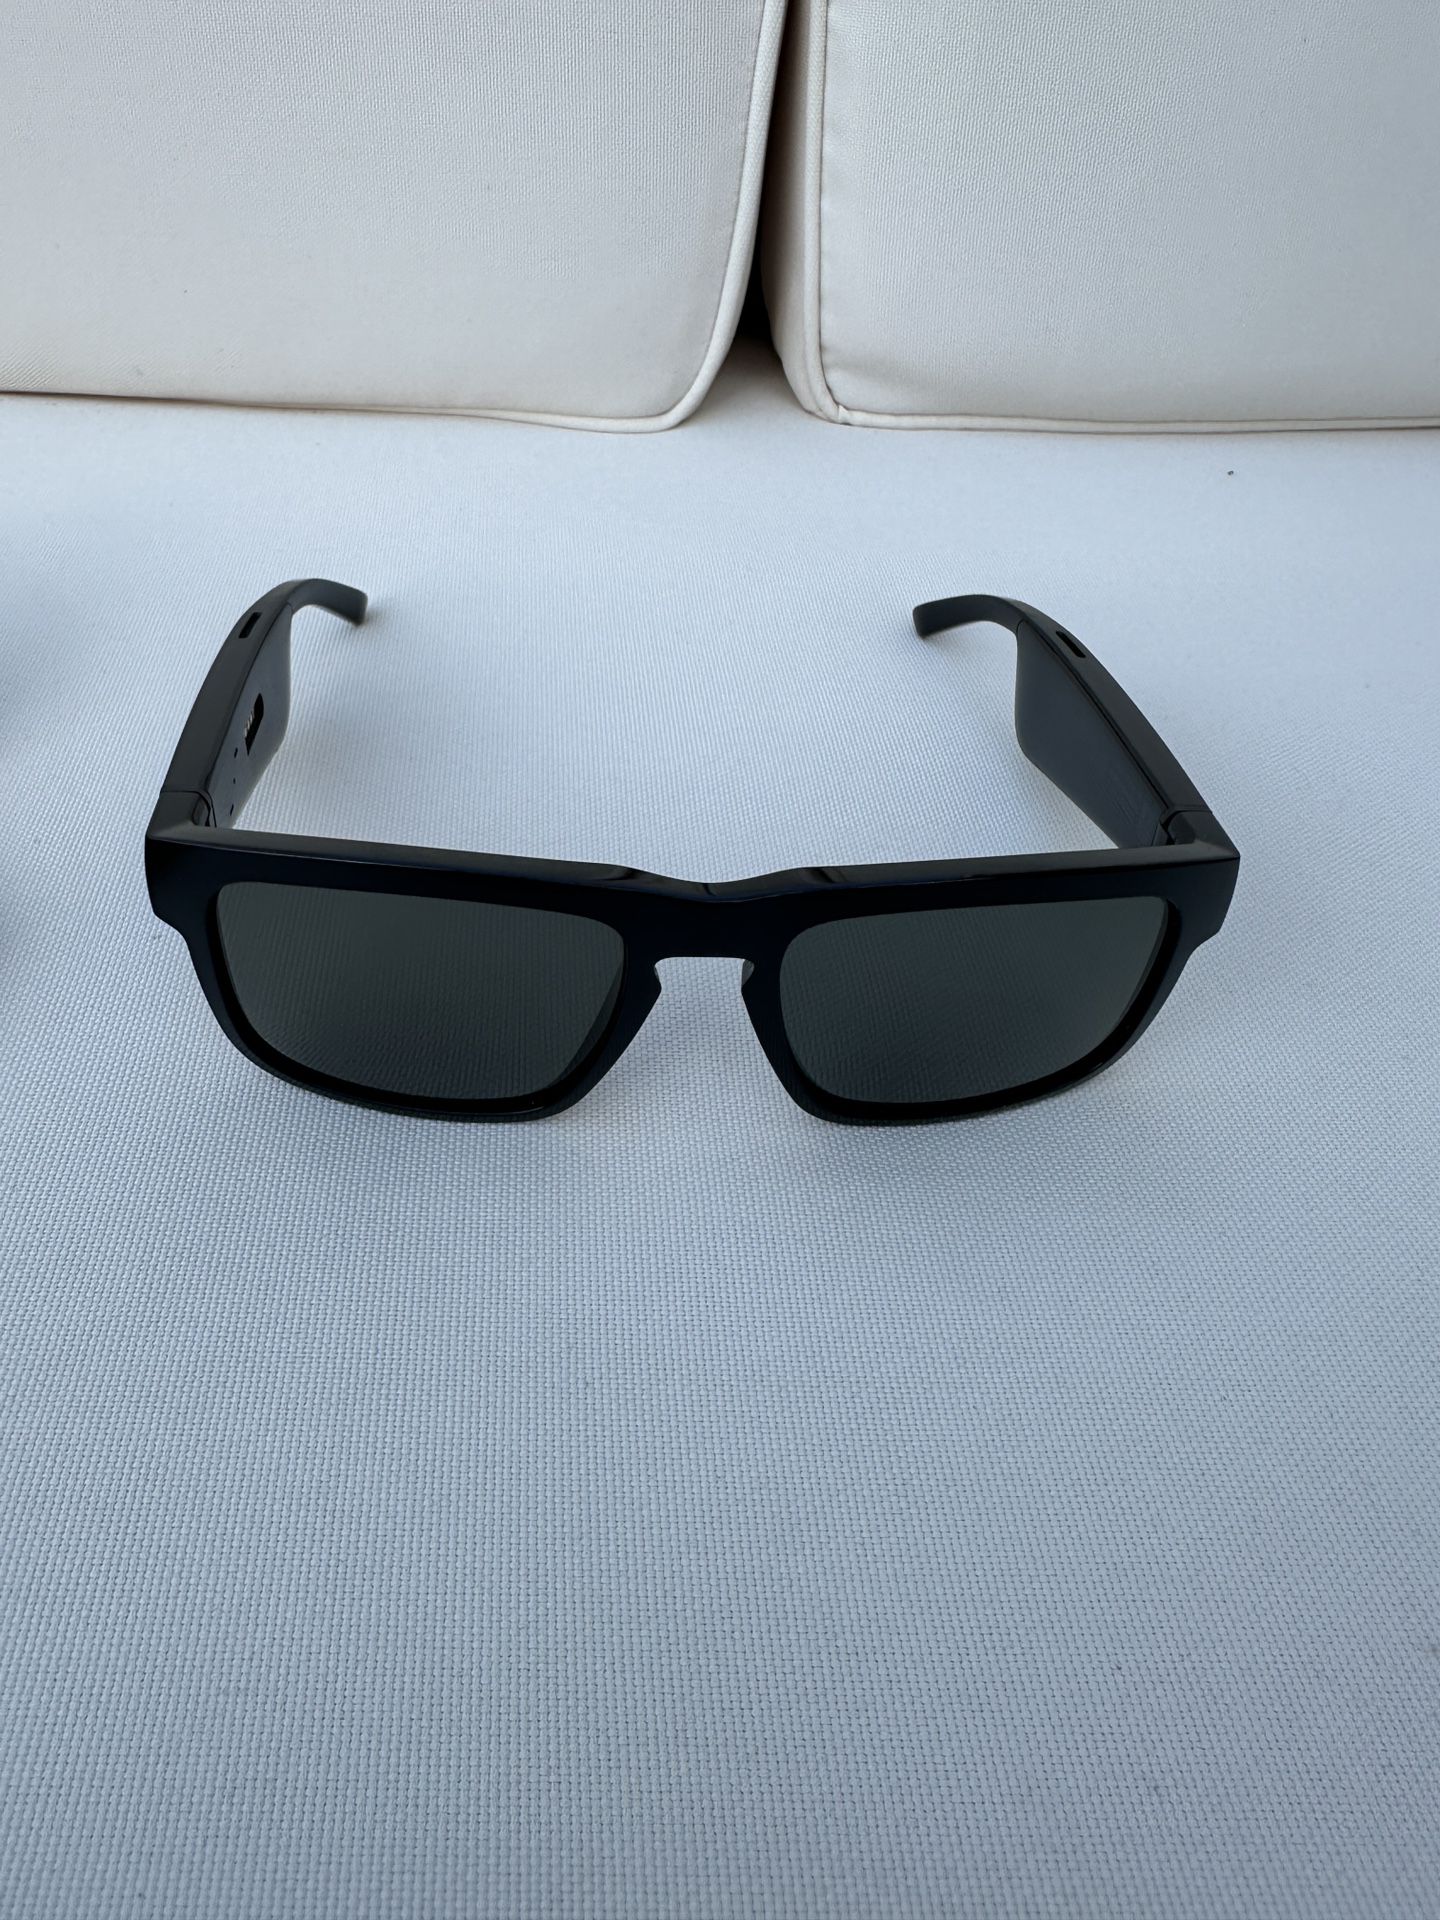 Bose Speaker Polarized Sunglasses